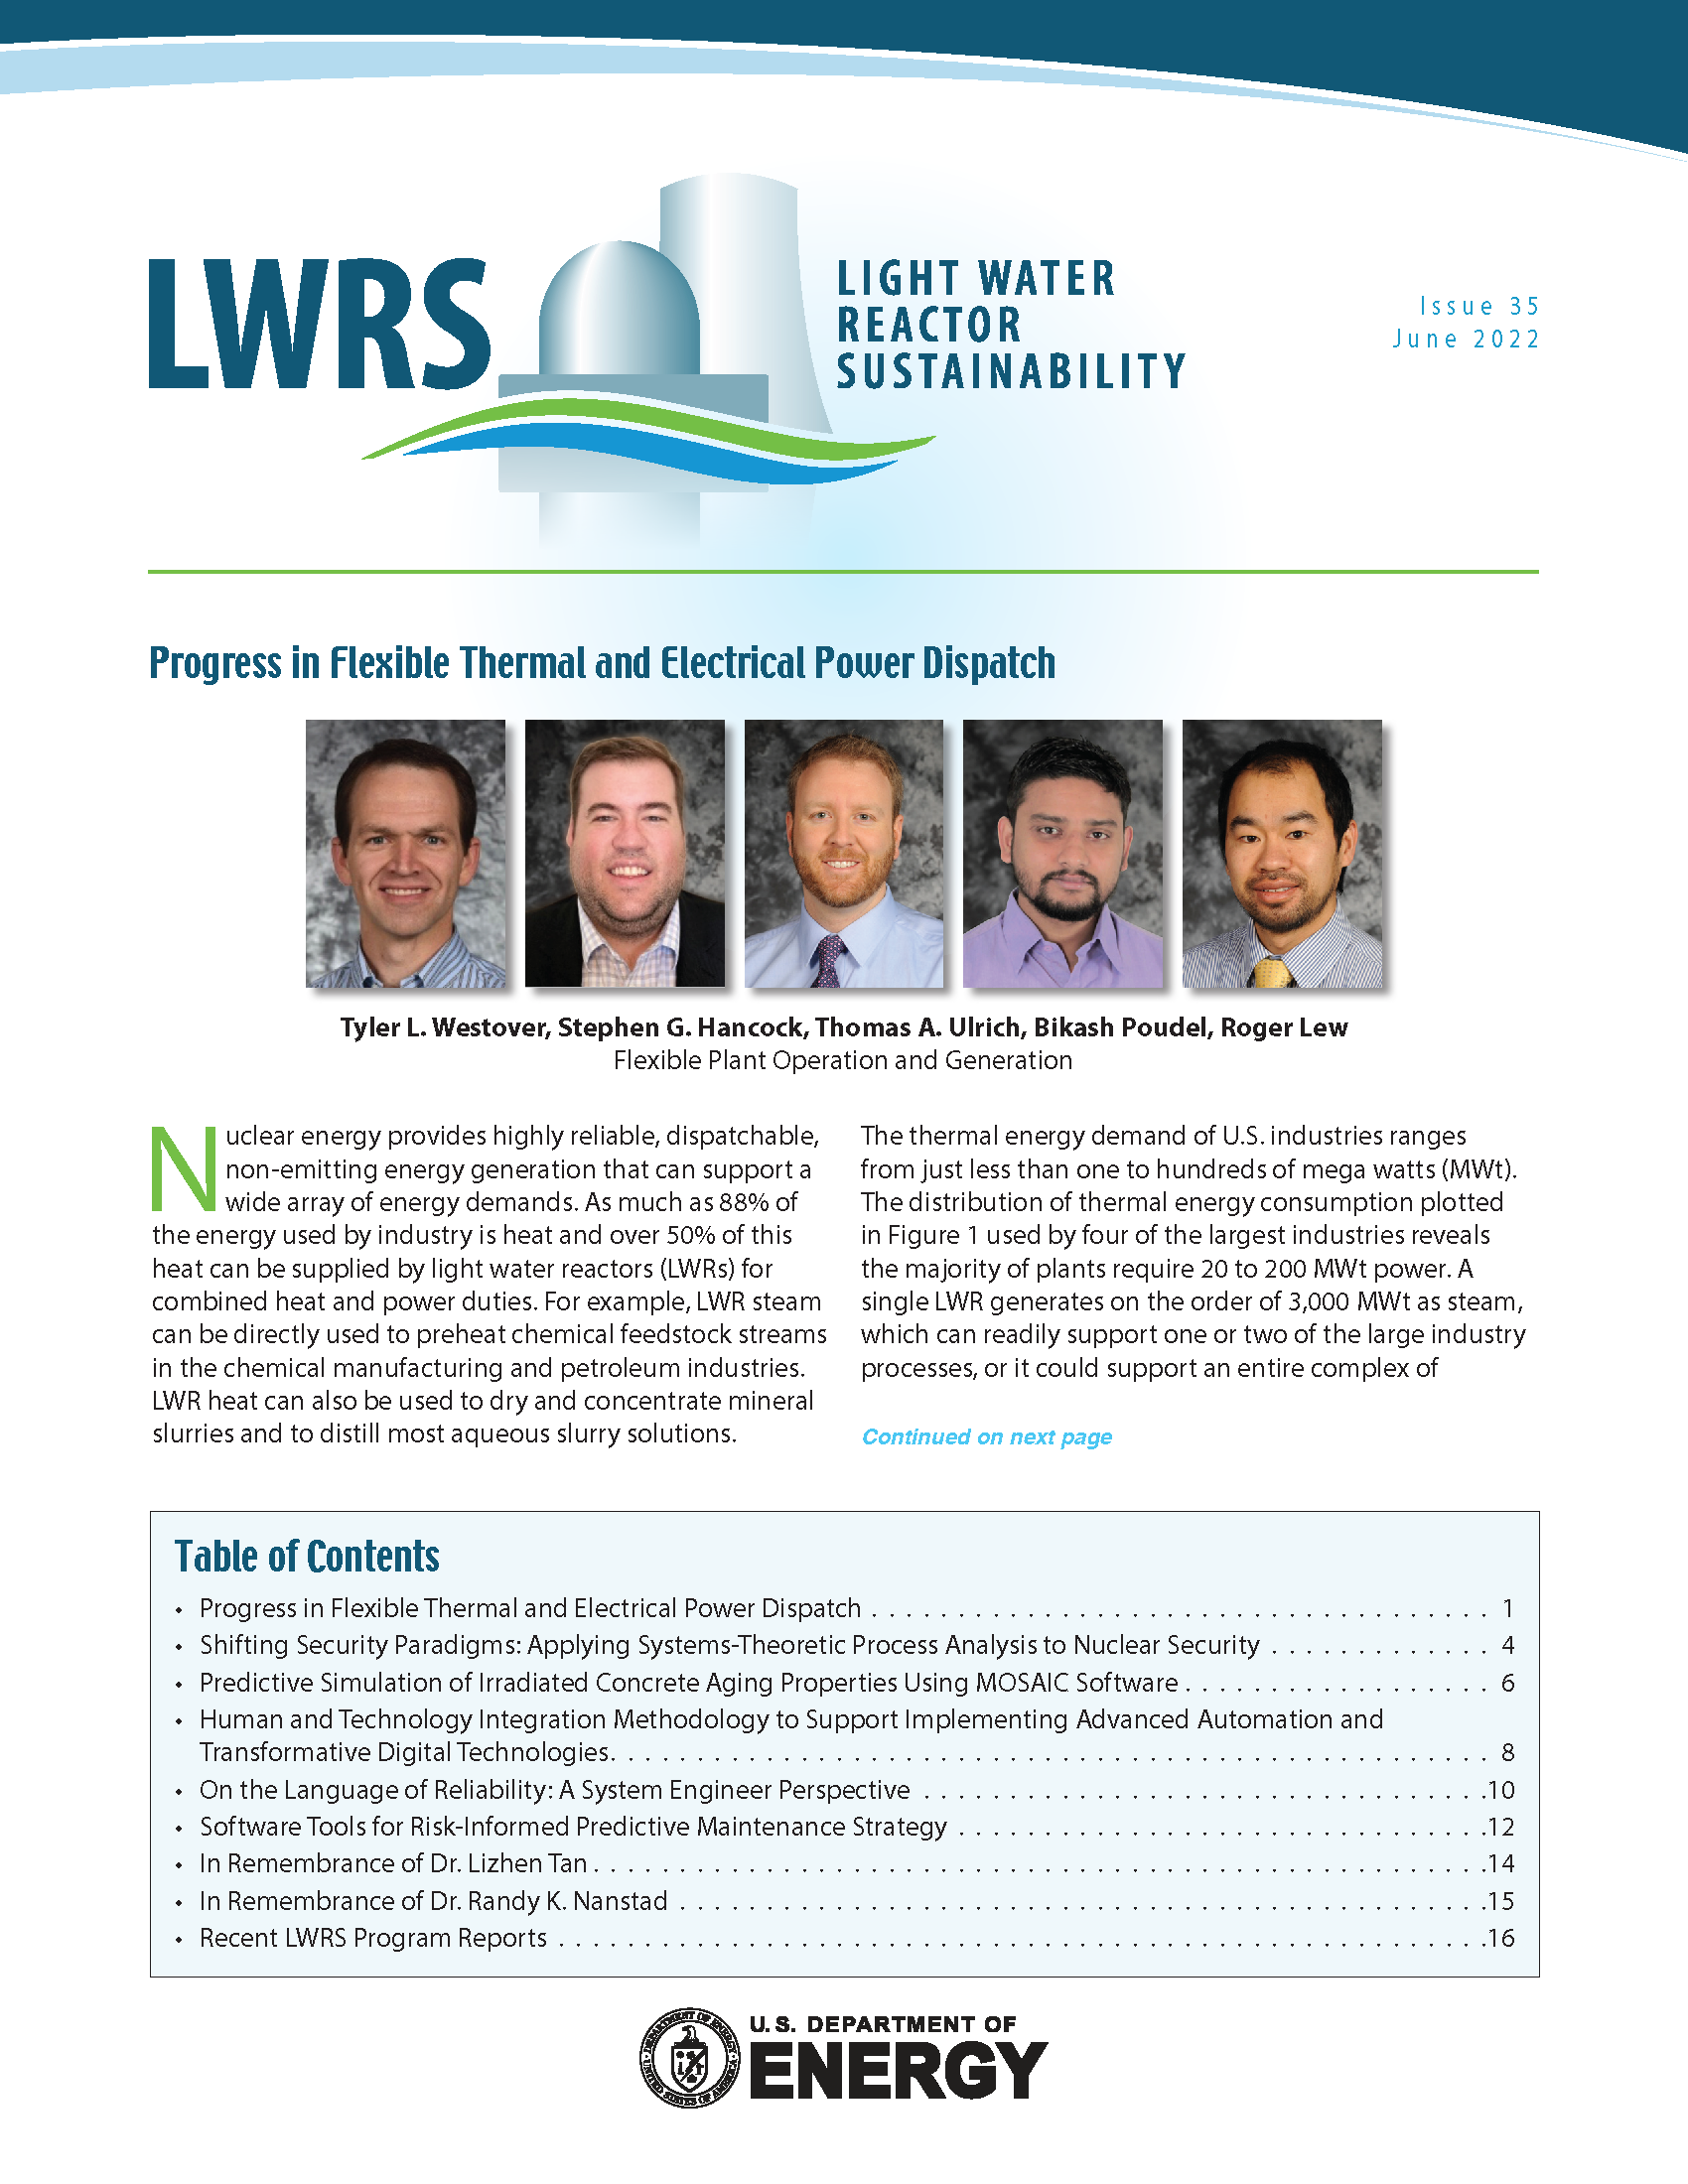 Light Water Reactor Sustainability Newsletter – Issue 35, June 2022